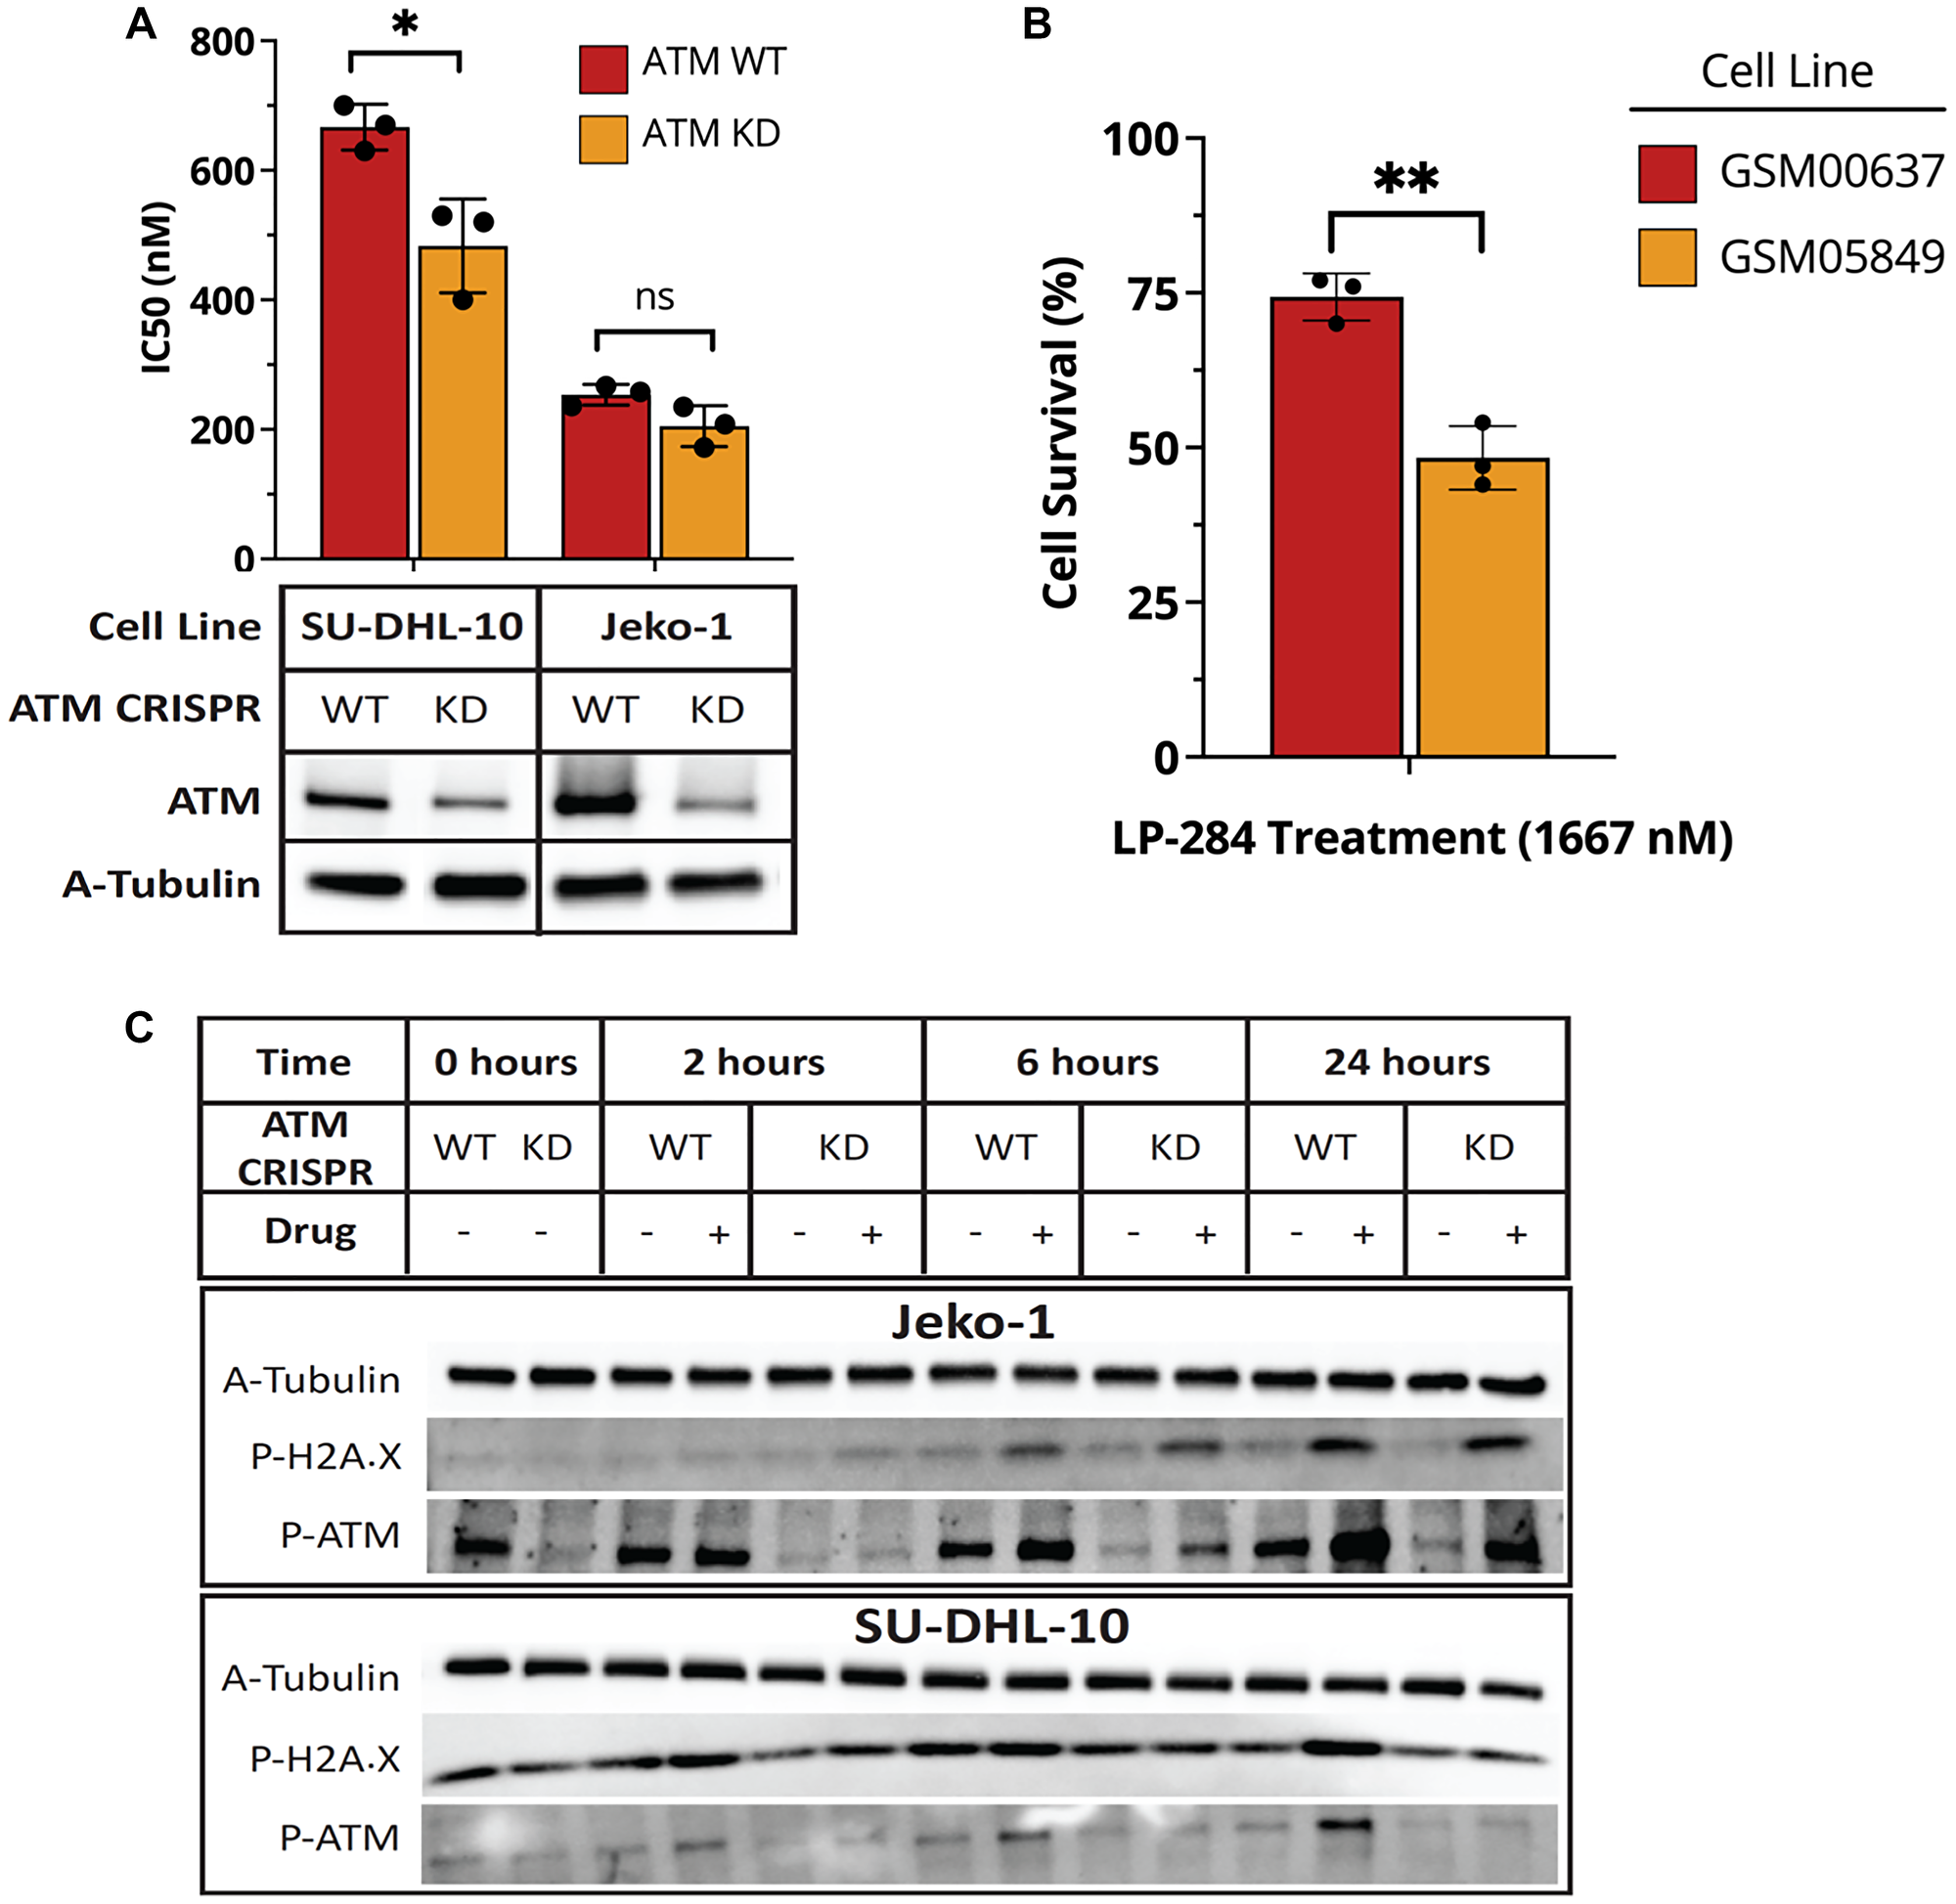 ATM-deficient cells show increased sensitivity to LP-284.